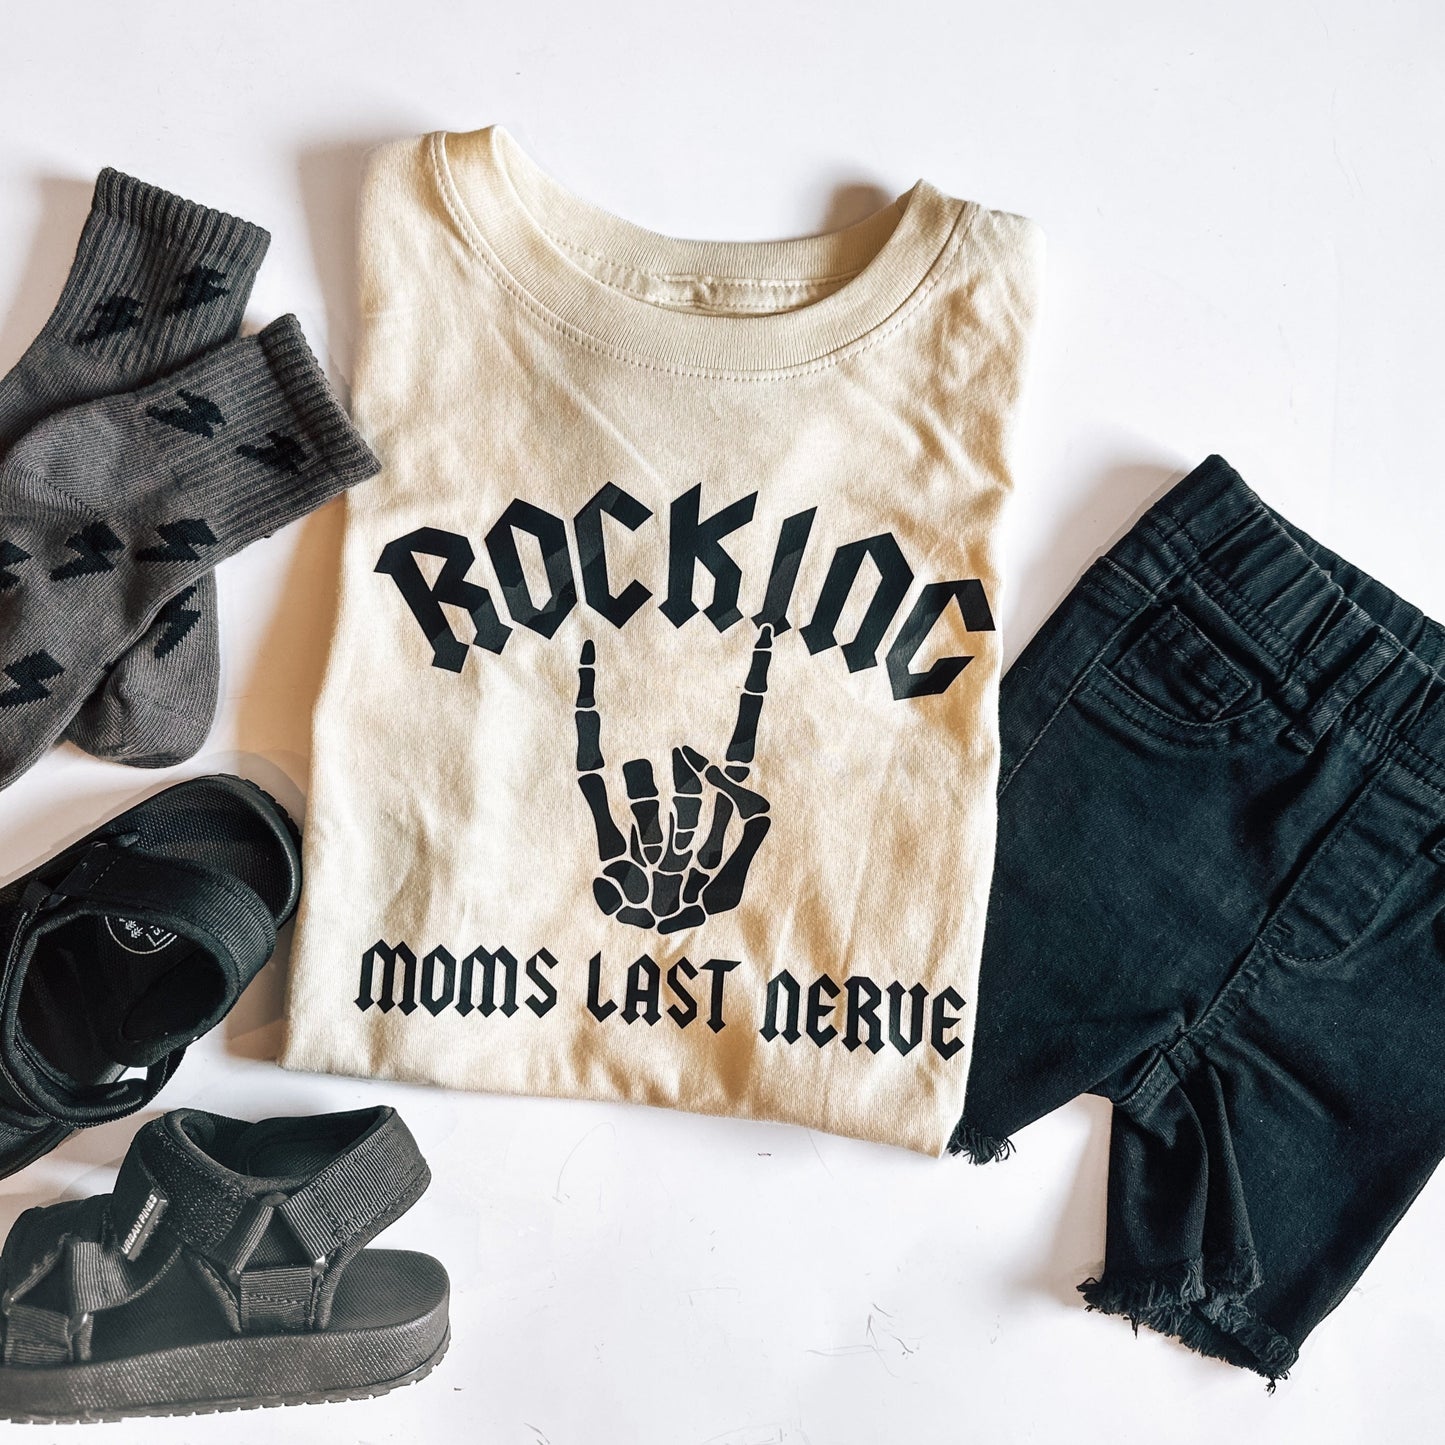 Rockin' Moms Last Nerve | Ivory Graphic T-Shirt